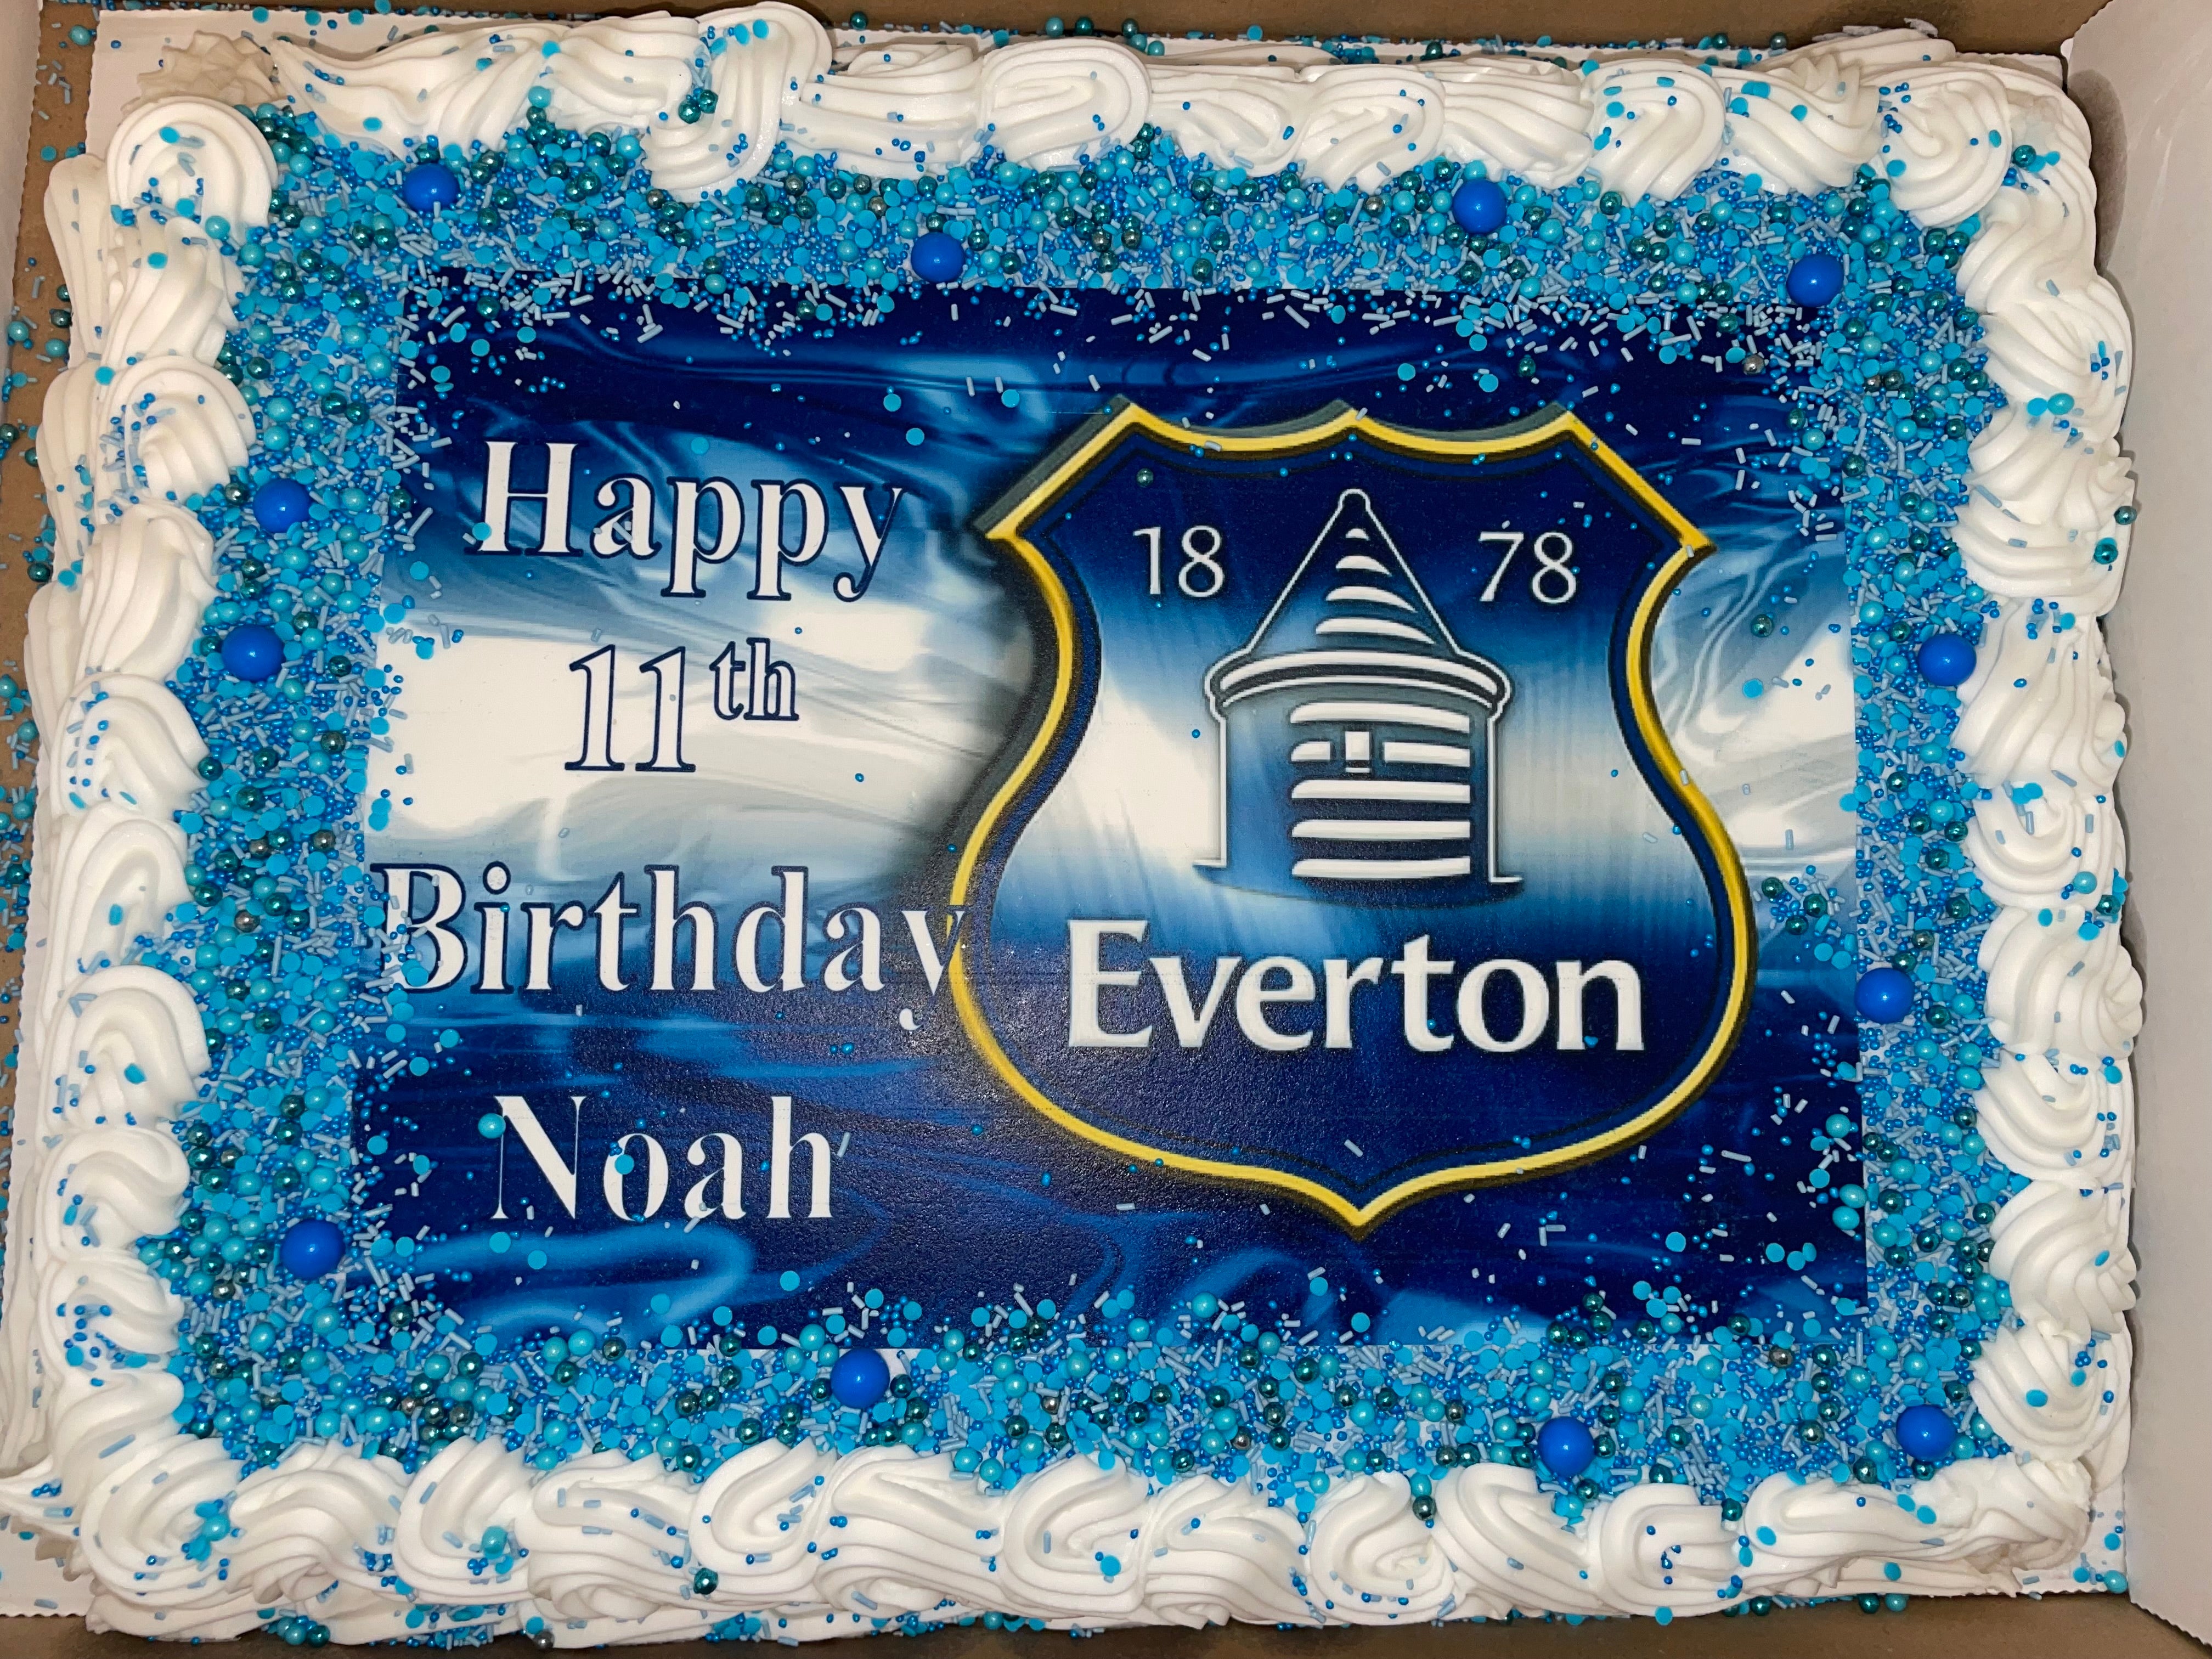 Everton | Pretty cakes, Cake decorating, Cake